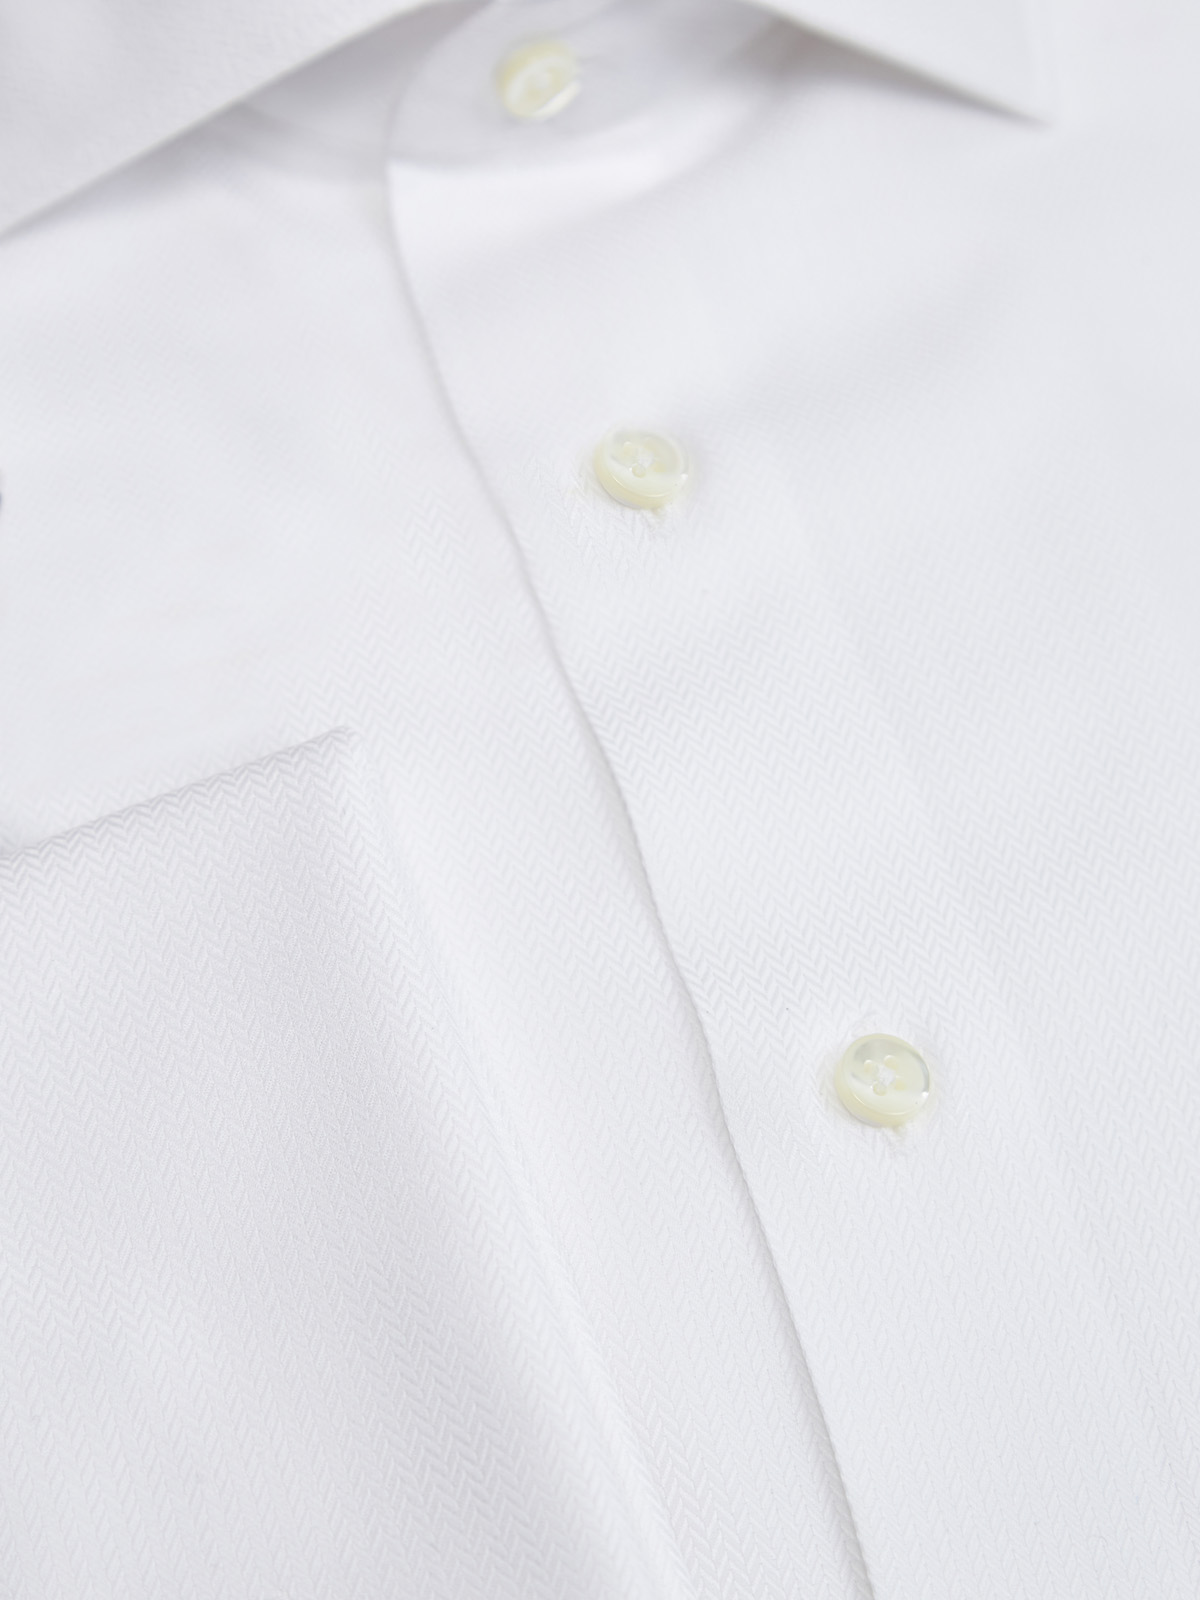 Рубашка из хлопка Impeccabile с паттерном в тон CANALI, цвет белый, размер 50;52;52;54;56;58 - фото 2